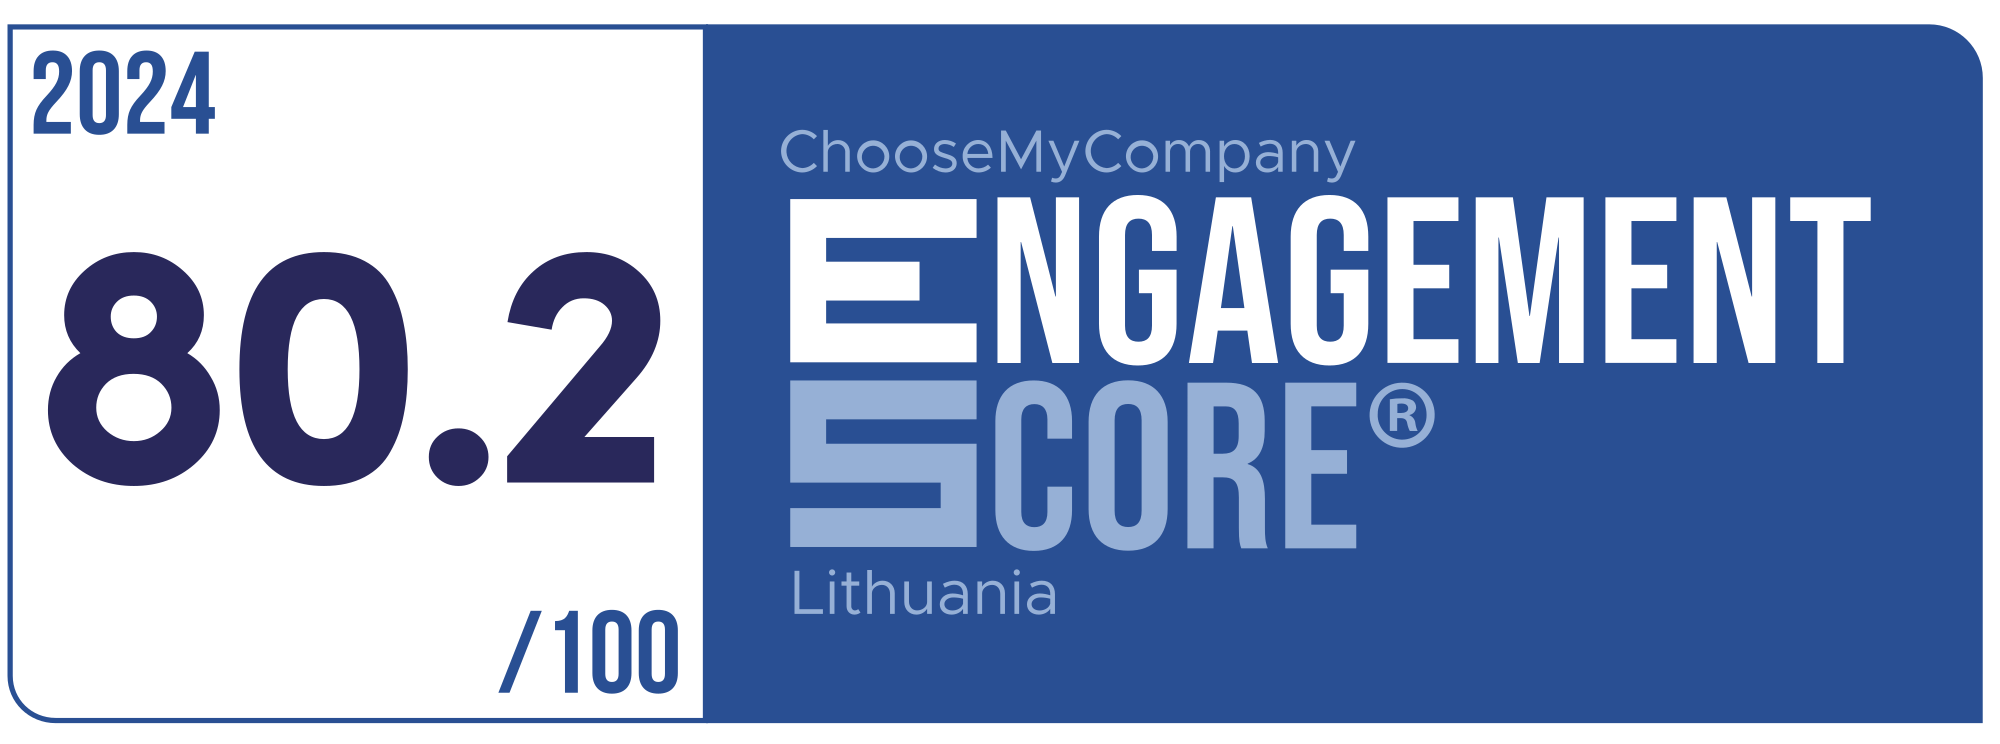 Label Engagement Score 2024 Lithuania